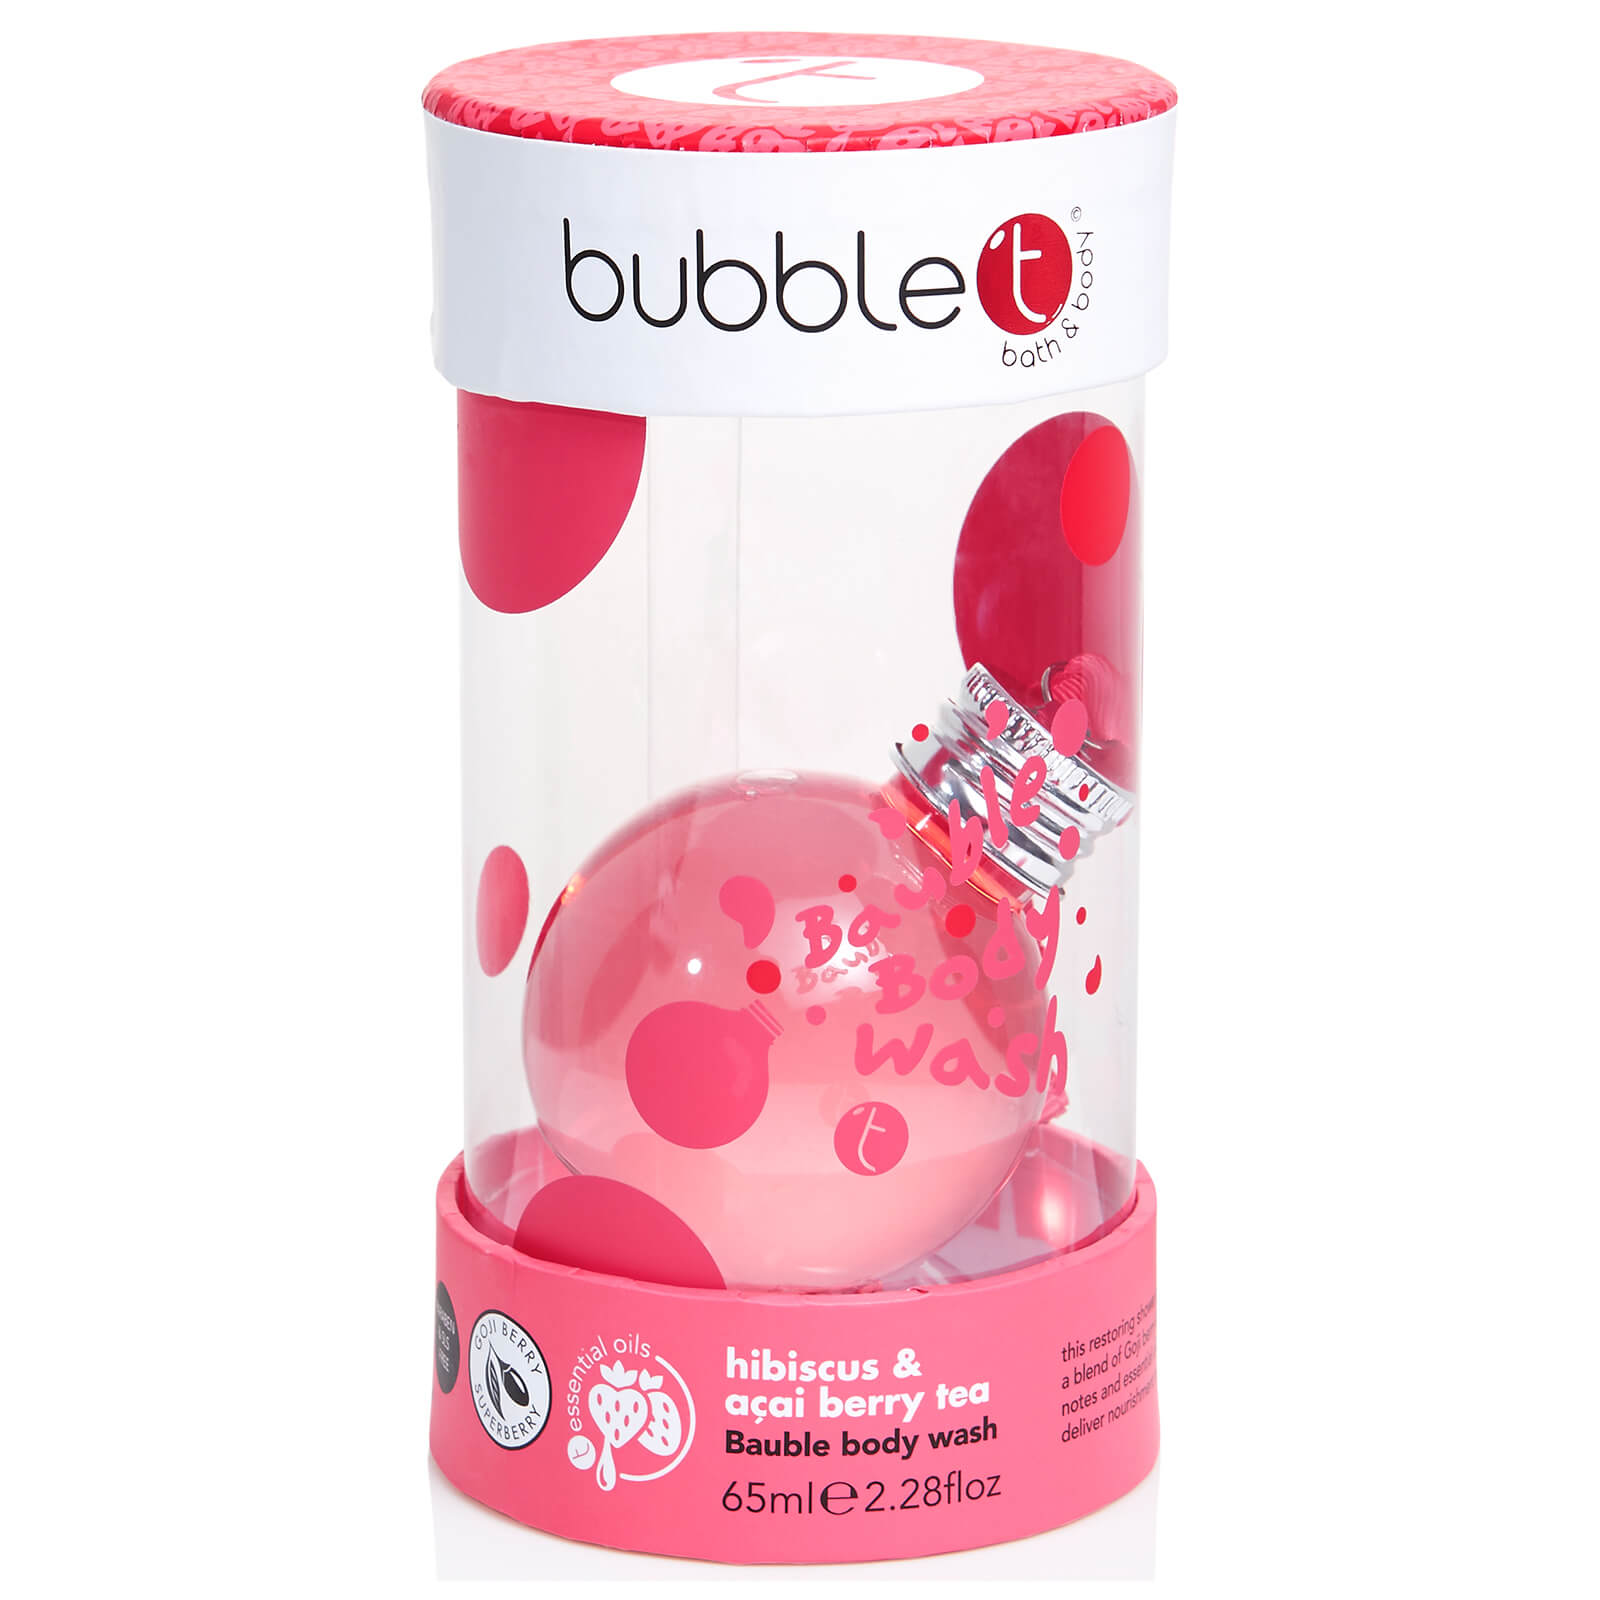 Gel de ducha Bath & Body de Bubble T - Solo Bauble 100ml (té de hibiscus y baya de açaí)